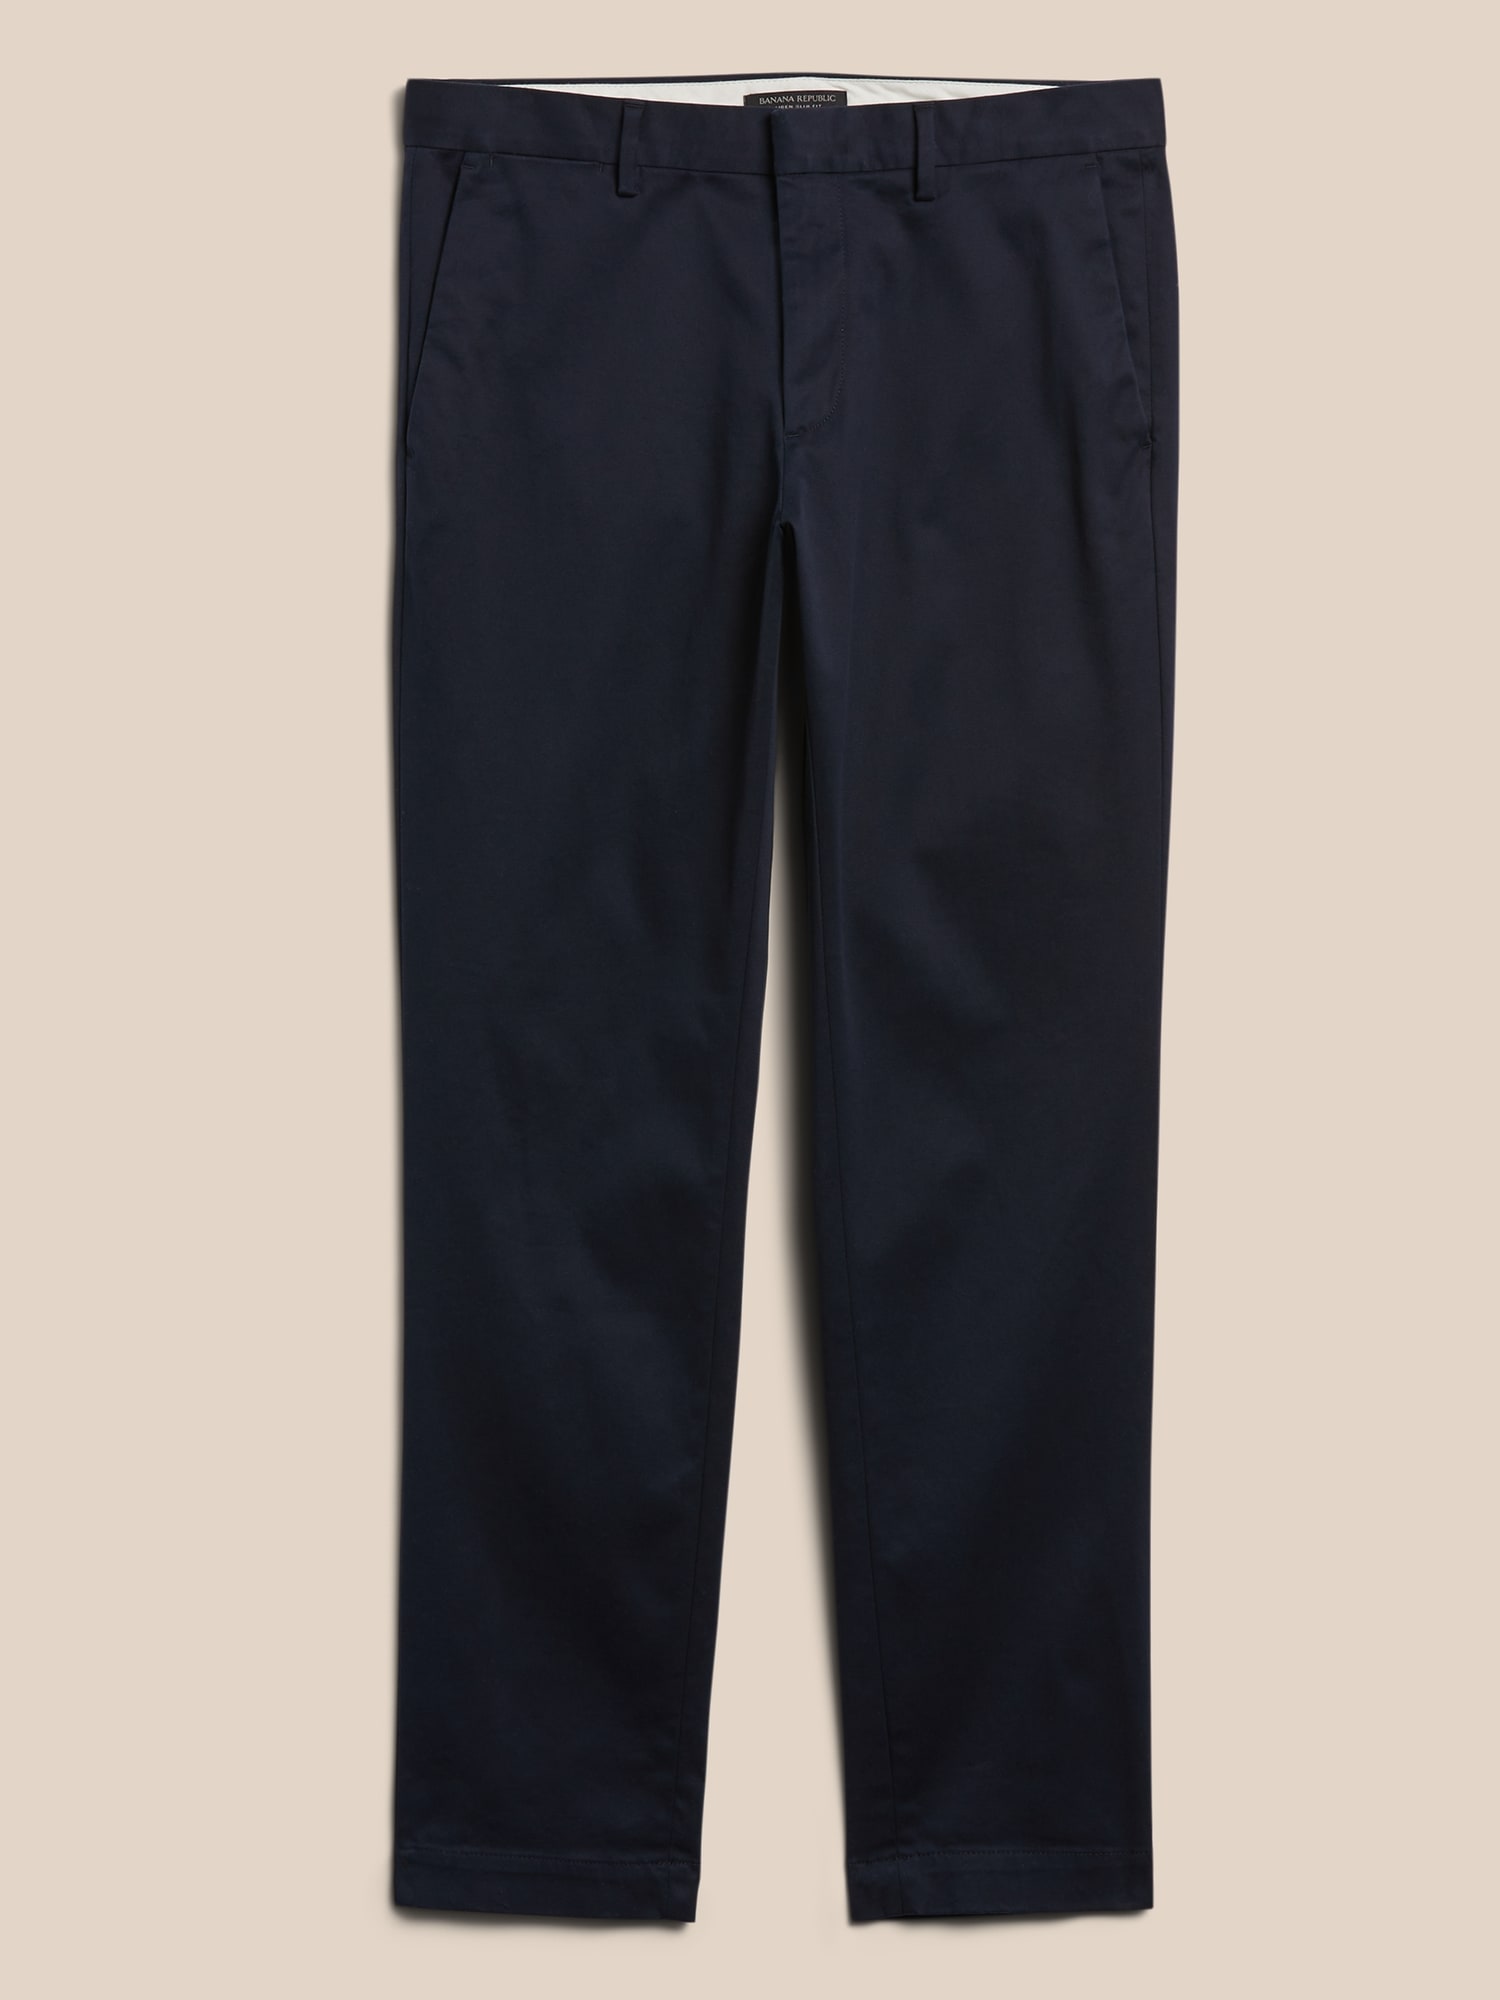 Banana Republic Men's Fulton Skinny Fit Cotton Chino Pants Size 35x32 ...